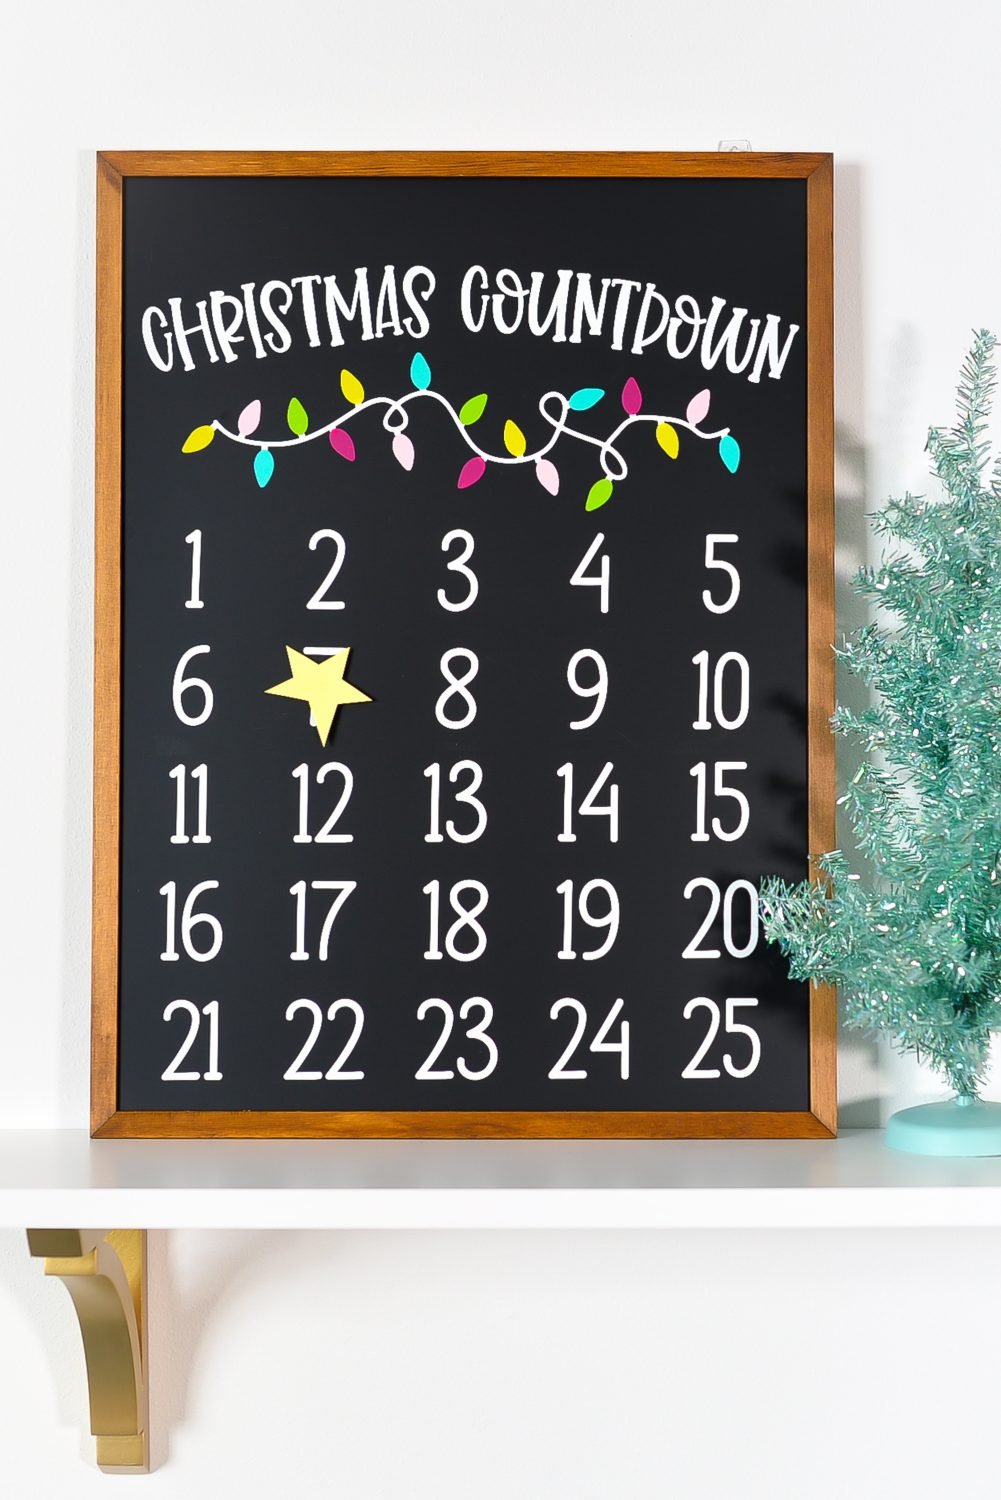 Christmas countdown calendar on a shelf with a faux Christmas tree.